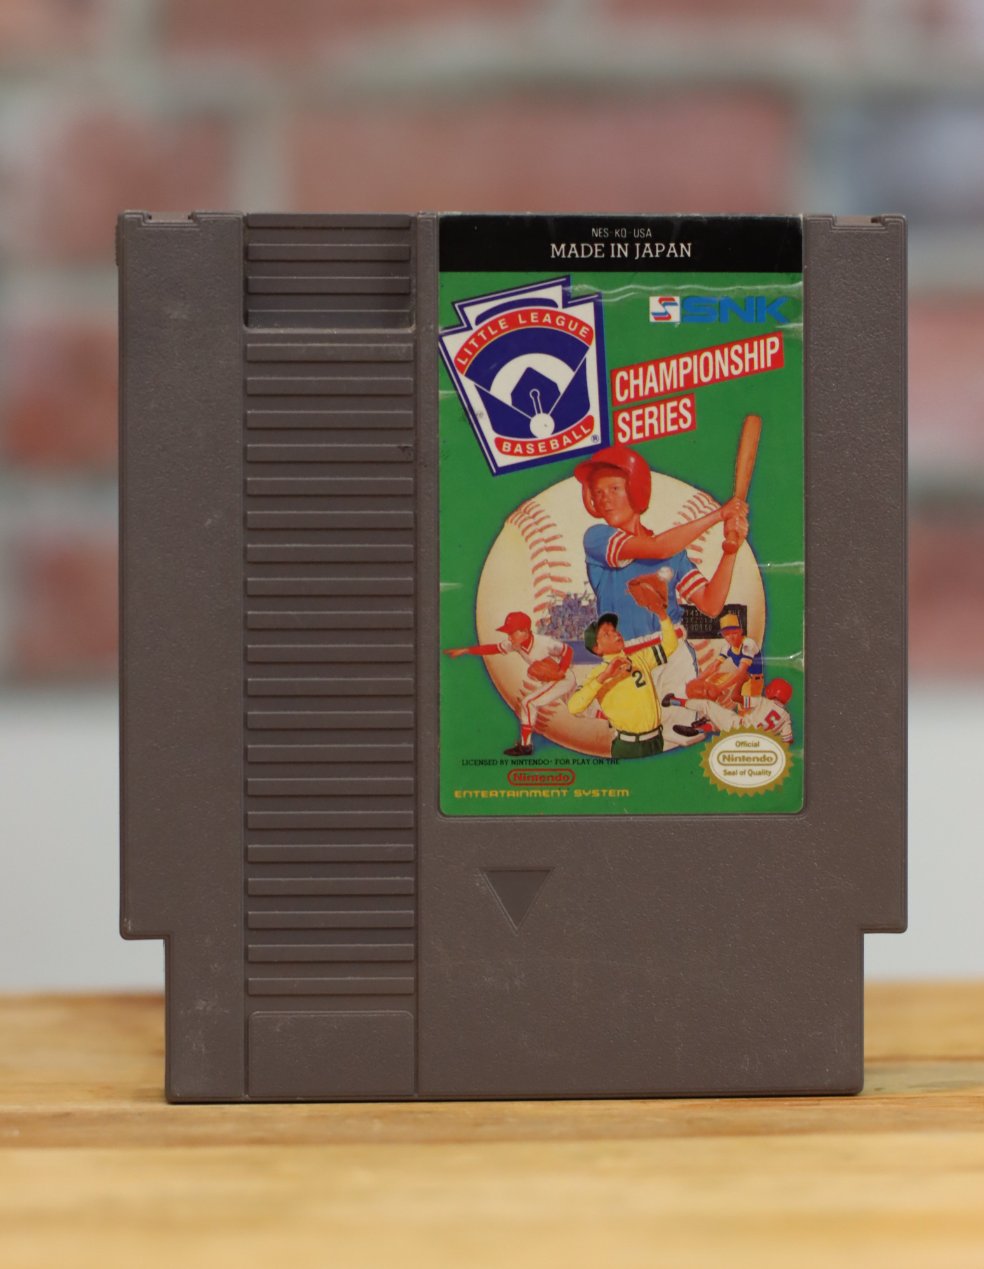 Little League Championship Series Baseball Original NES Nintendo Video Game Tested